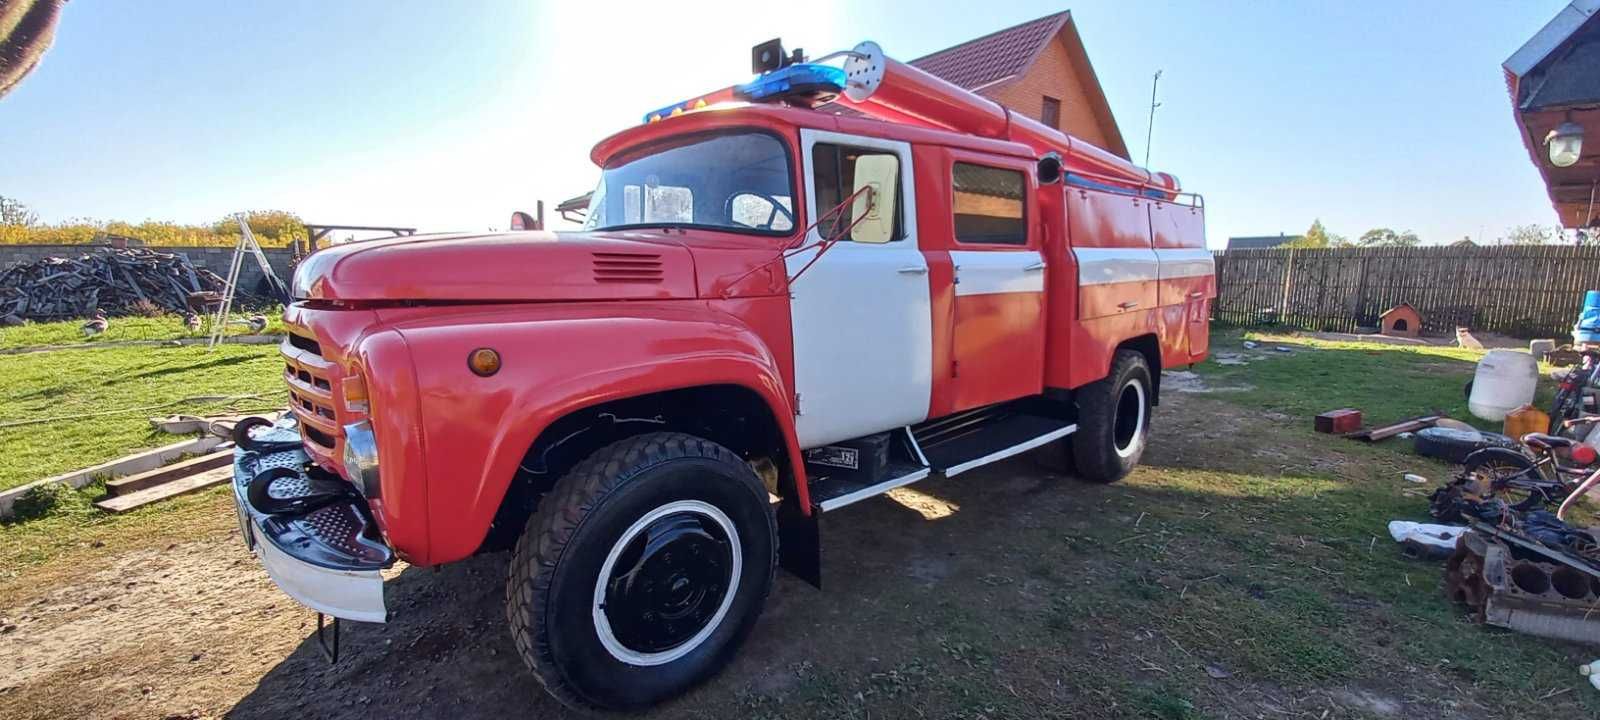 Продаю пожежний автомобіль, пожарную машину ЗИЛ 130 АЦ-40